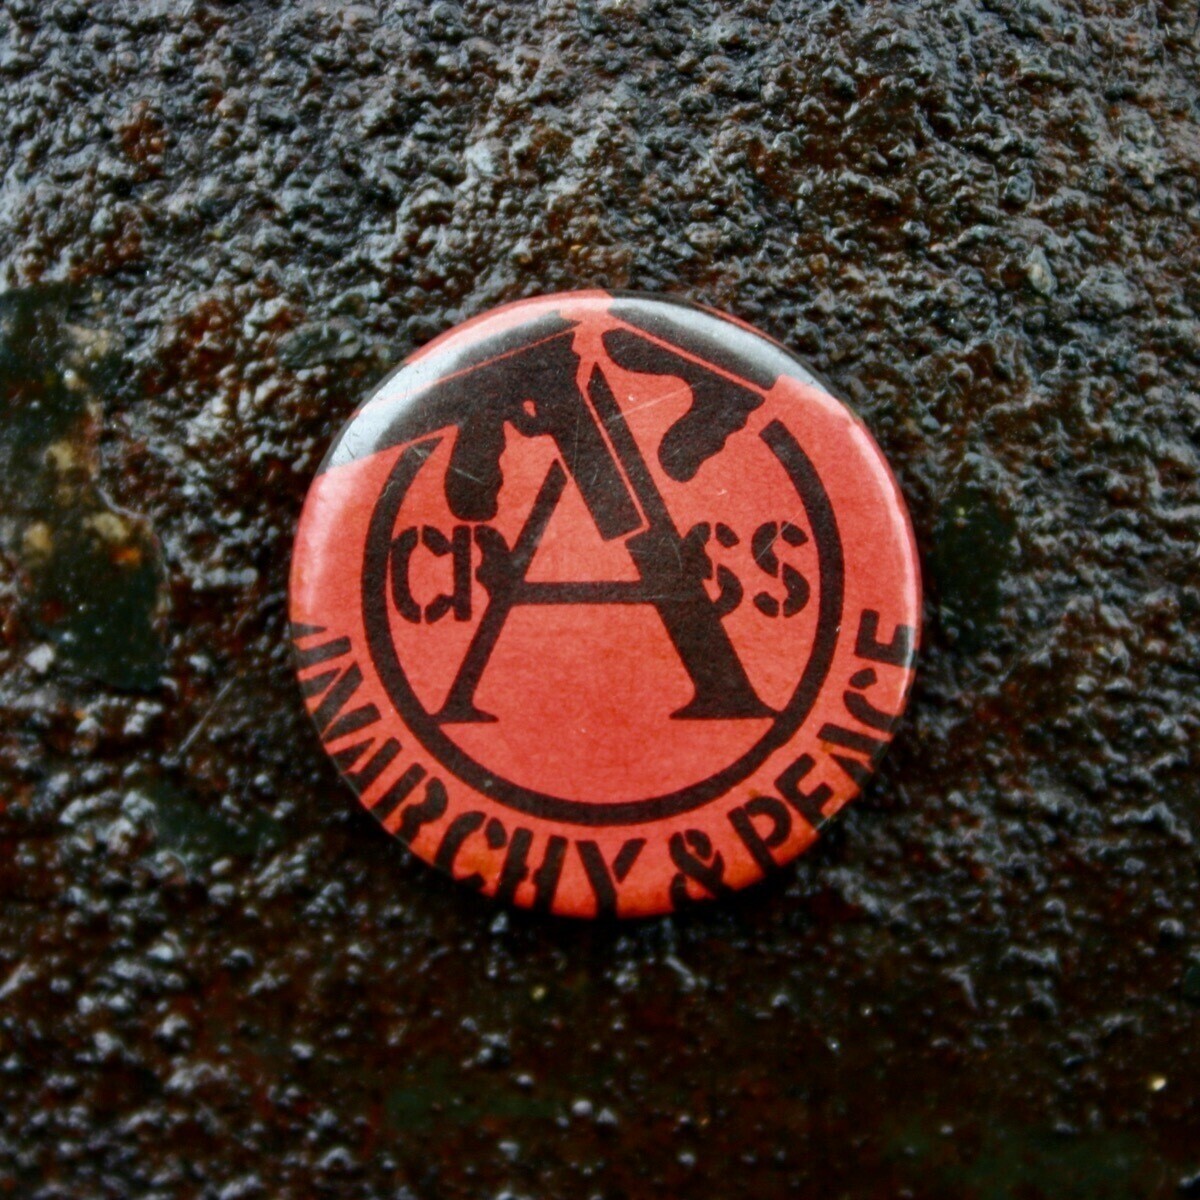 Crass badge